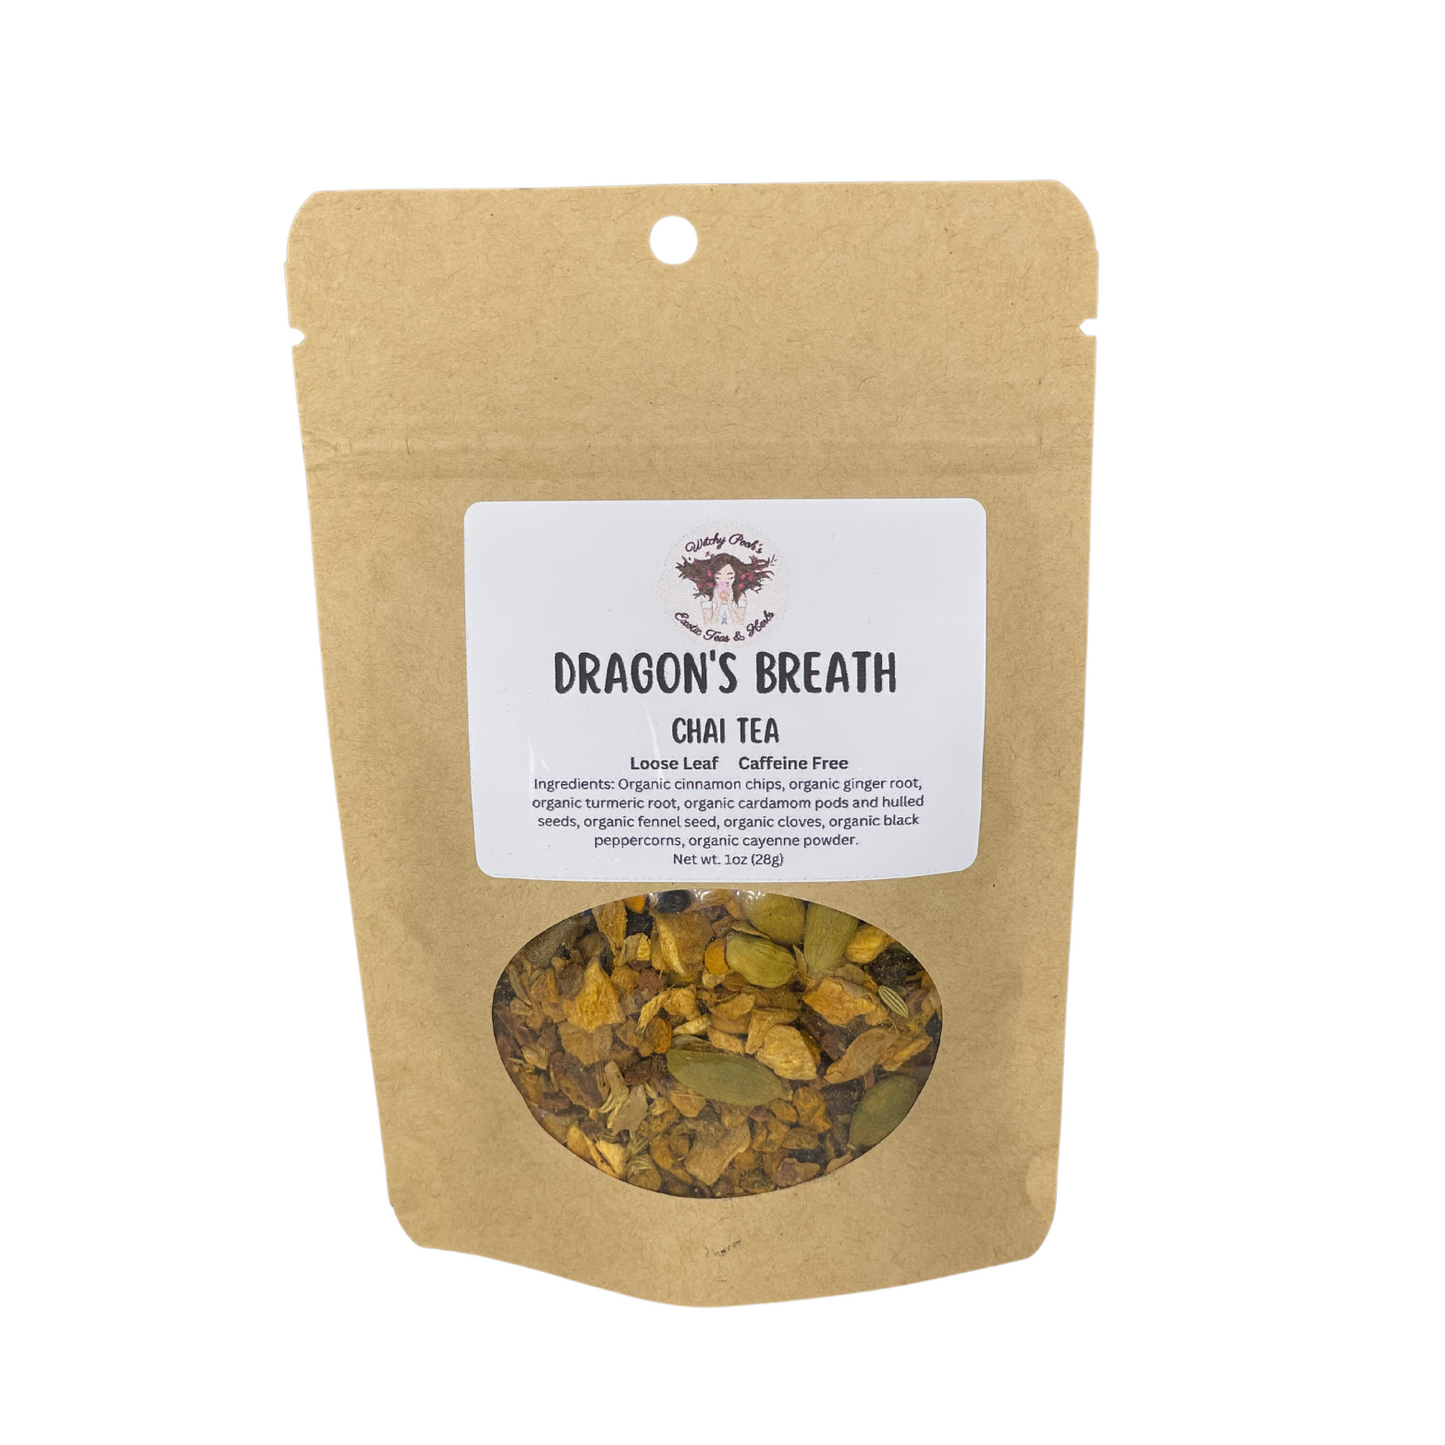 Dragon's Breath Loose Leaf Spicy Chai Herbal Tea, Bloody Mary Mix, Caffeine Free